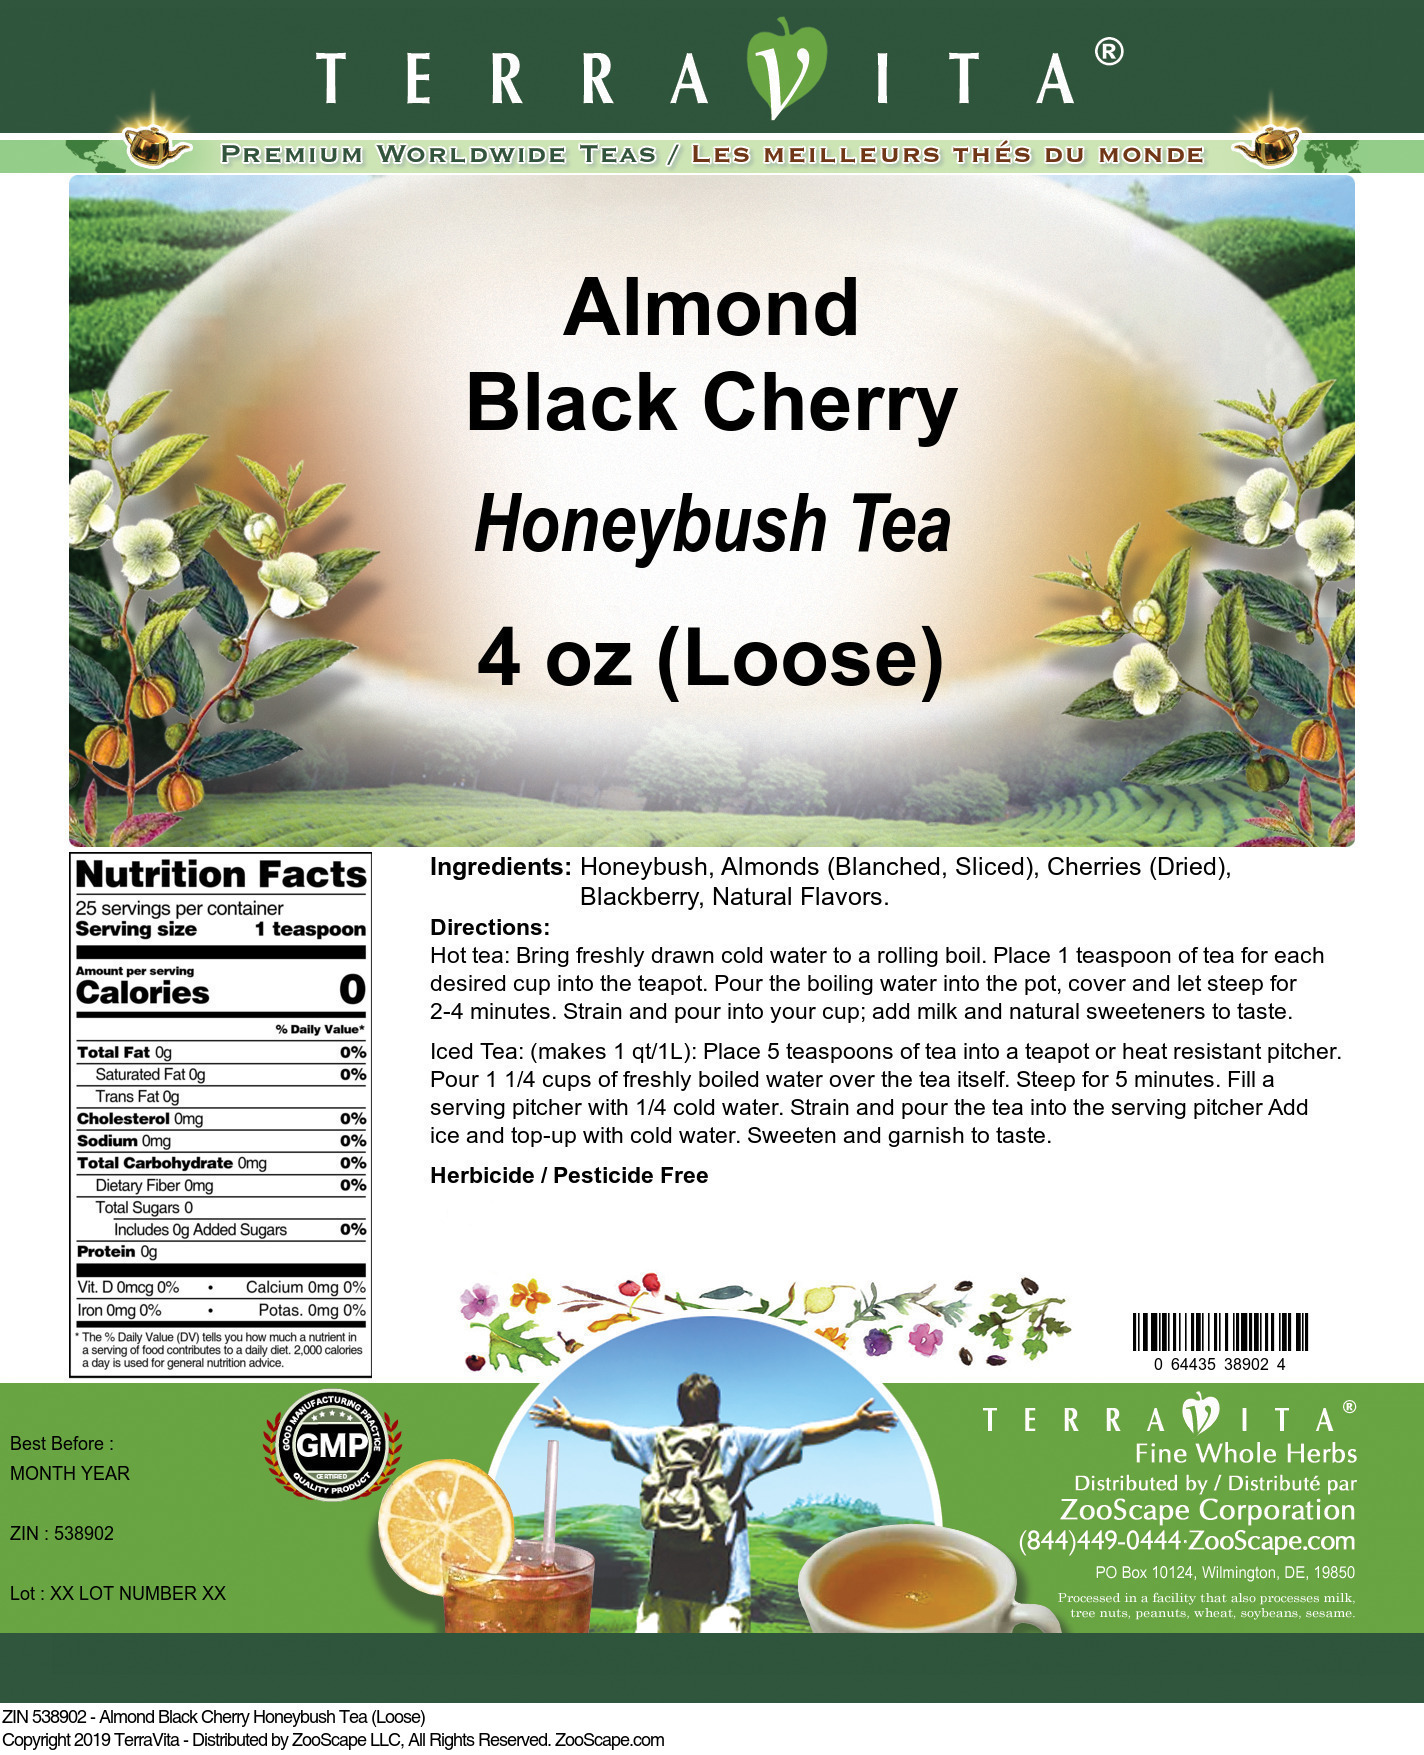 Almond Black Cherry Honeybush Tea (Loose) - Label